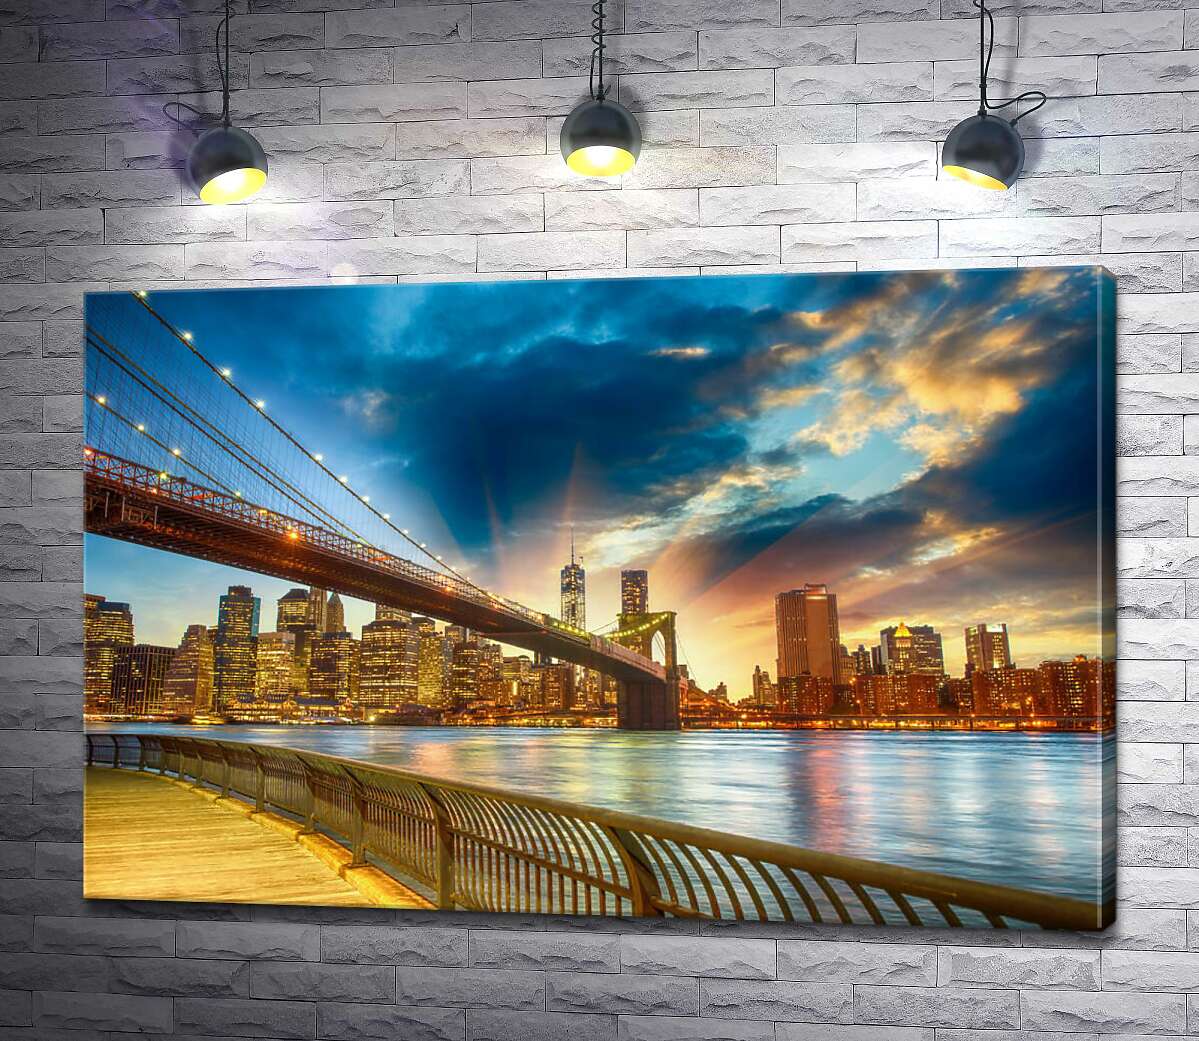 картина Бруклинский мост (Brooklyn Bridge) ведет к многолюдному мегаполису